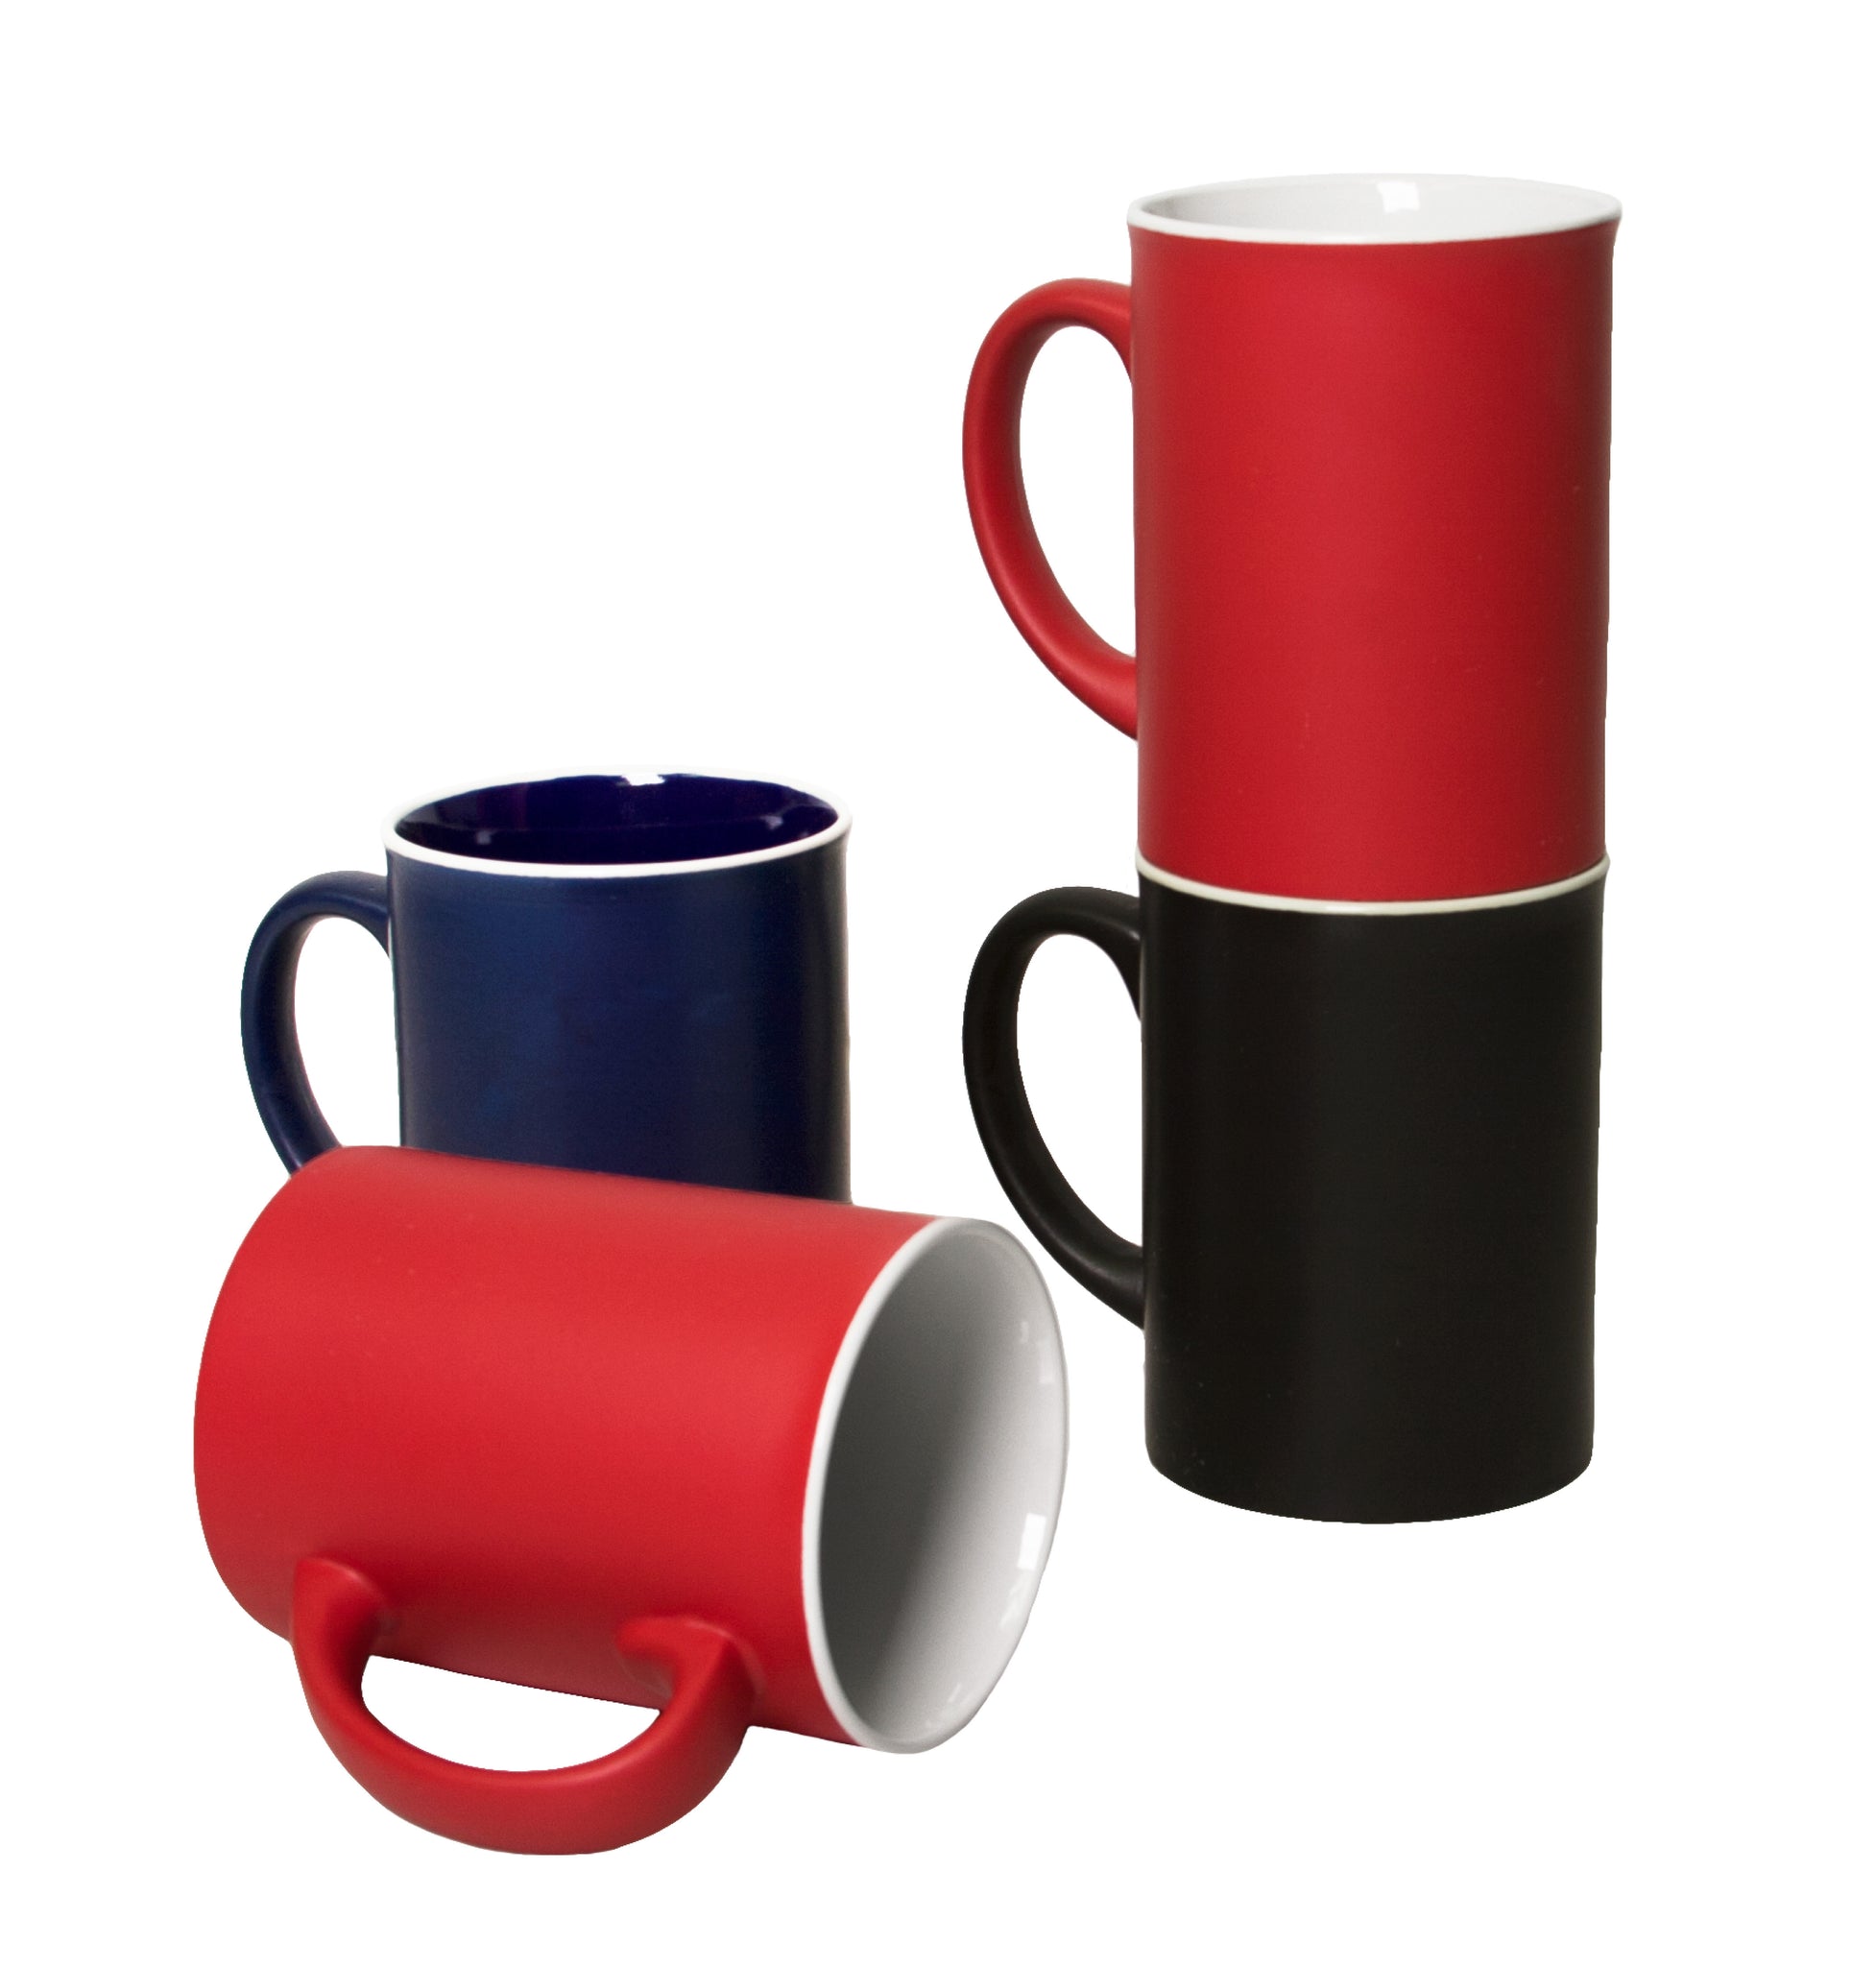  16oz Ceramic Coffee Mugs for Men/Women - Set of 2 with